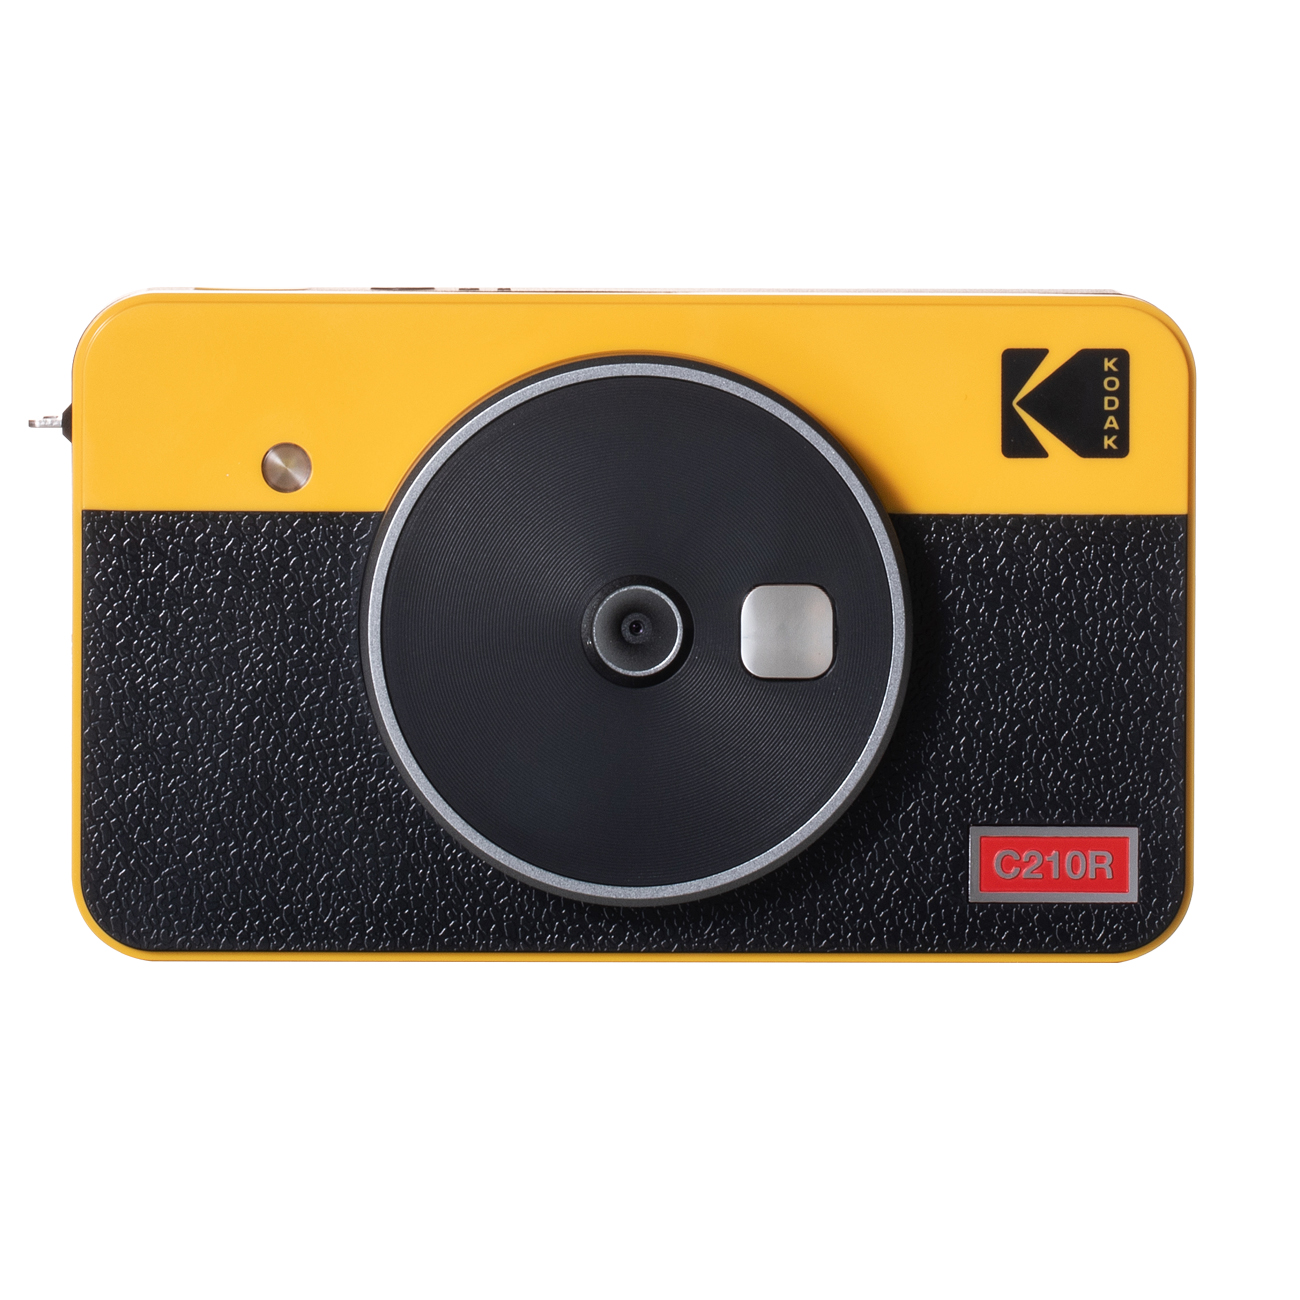 Kodak Mini Shot2 Retro 4Pass 2in1 Kamera & Drucker retail